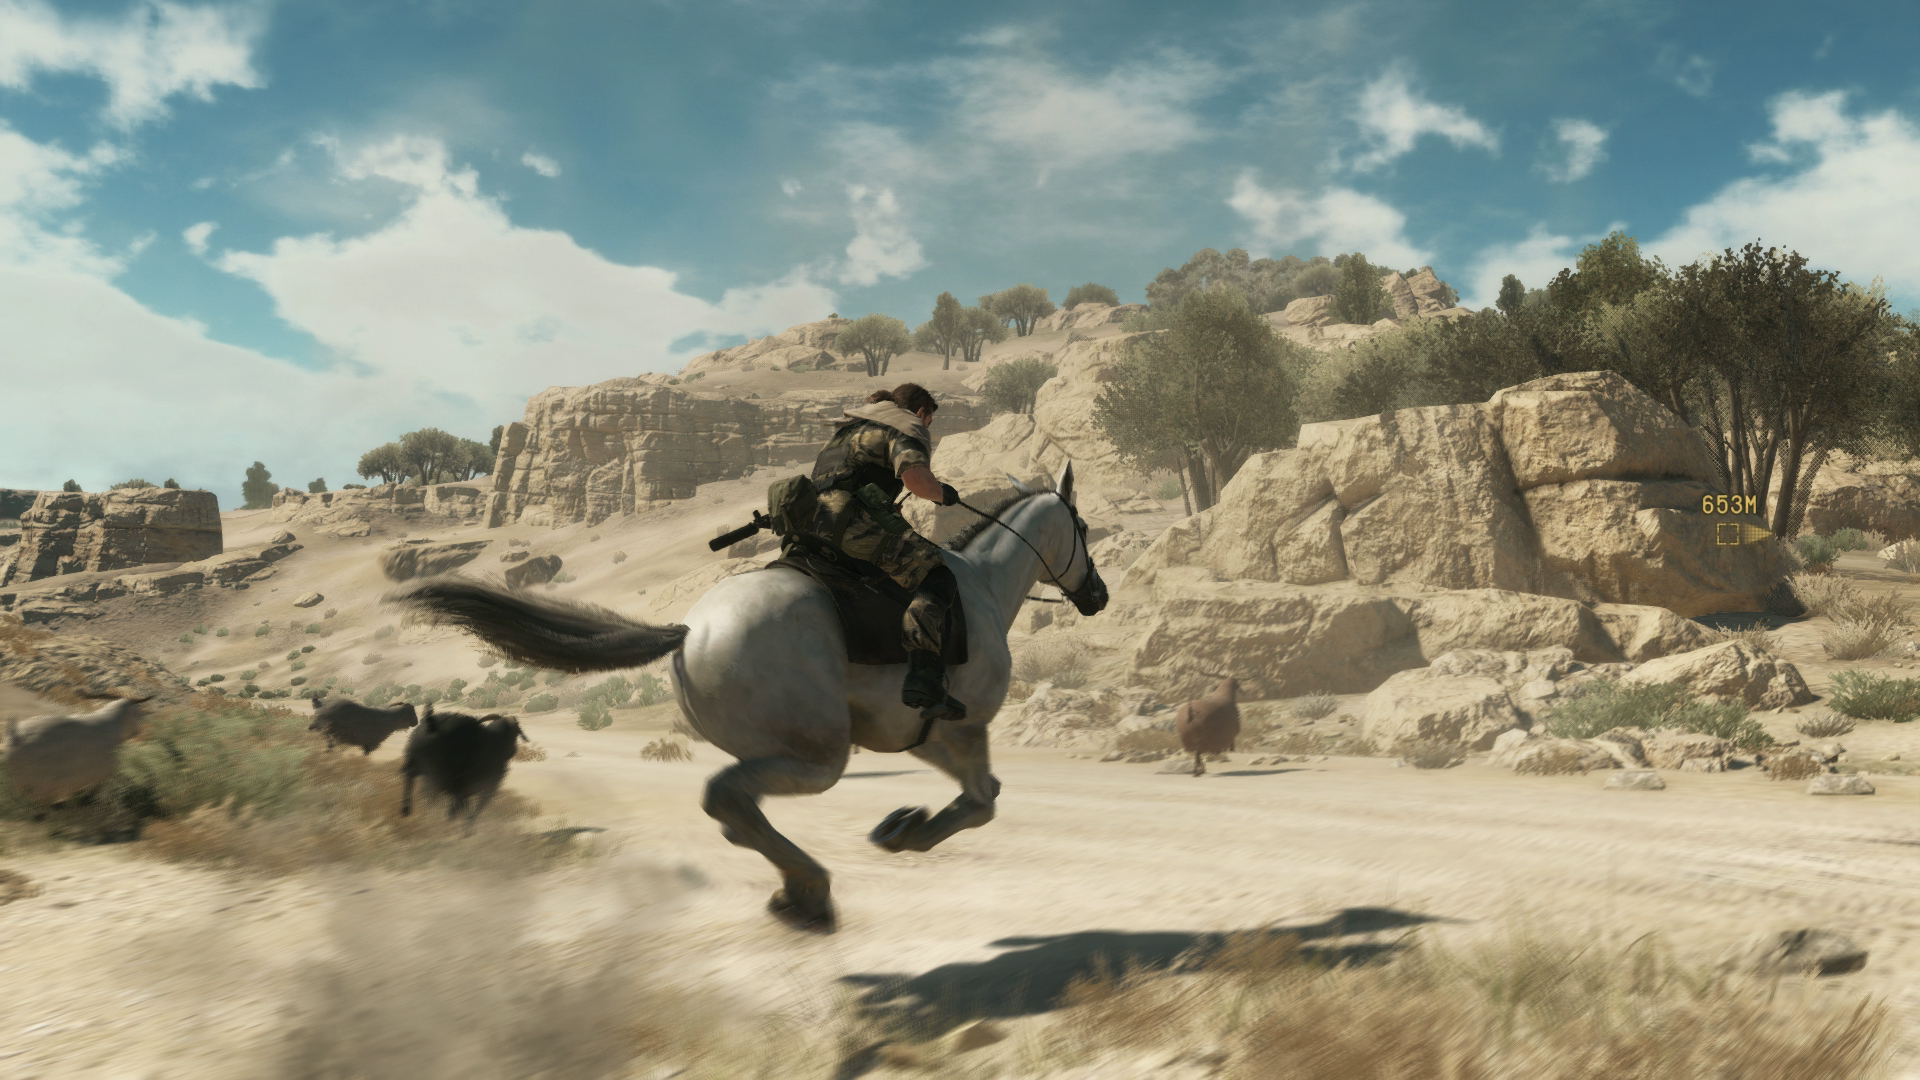 Metal Gear Solid 5 - Snake rides a horse through a rocky open desert